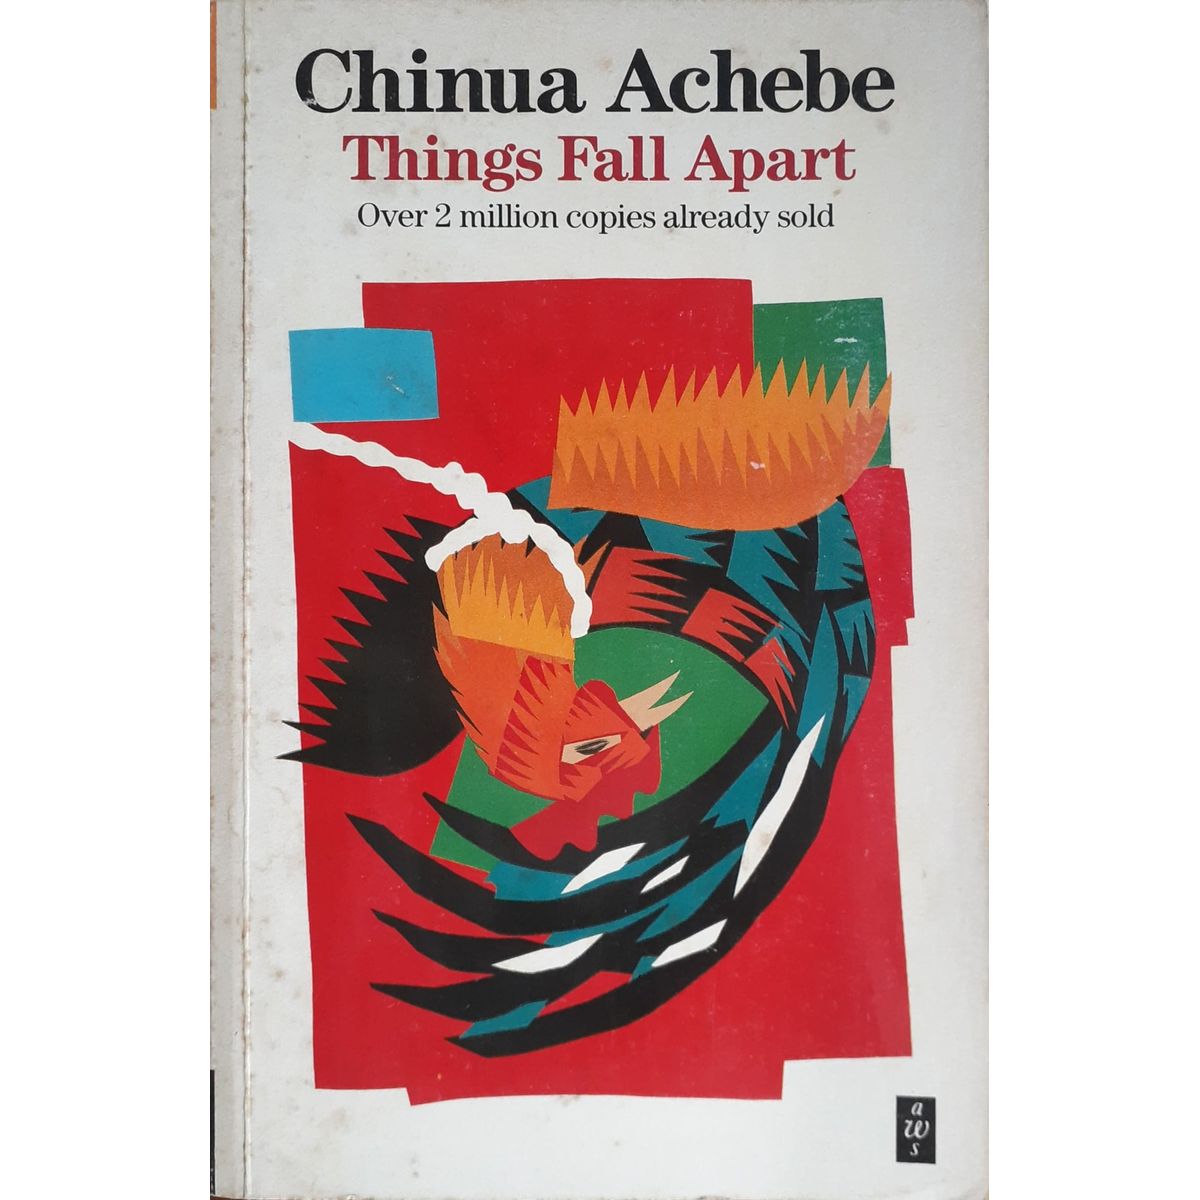 ISBN: 9780435905262 / 0435905260 - Things Fall Apart by Chinua Achebe [1991]